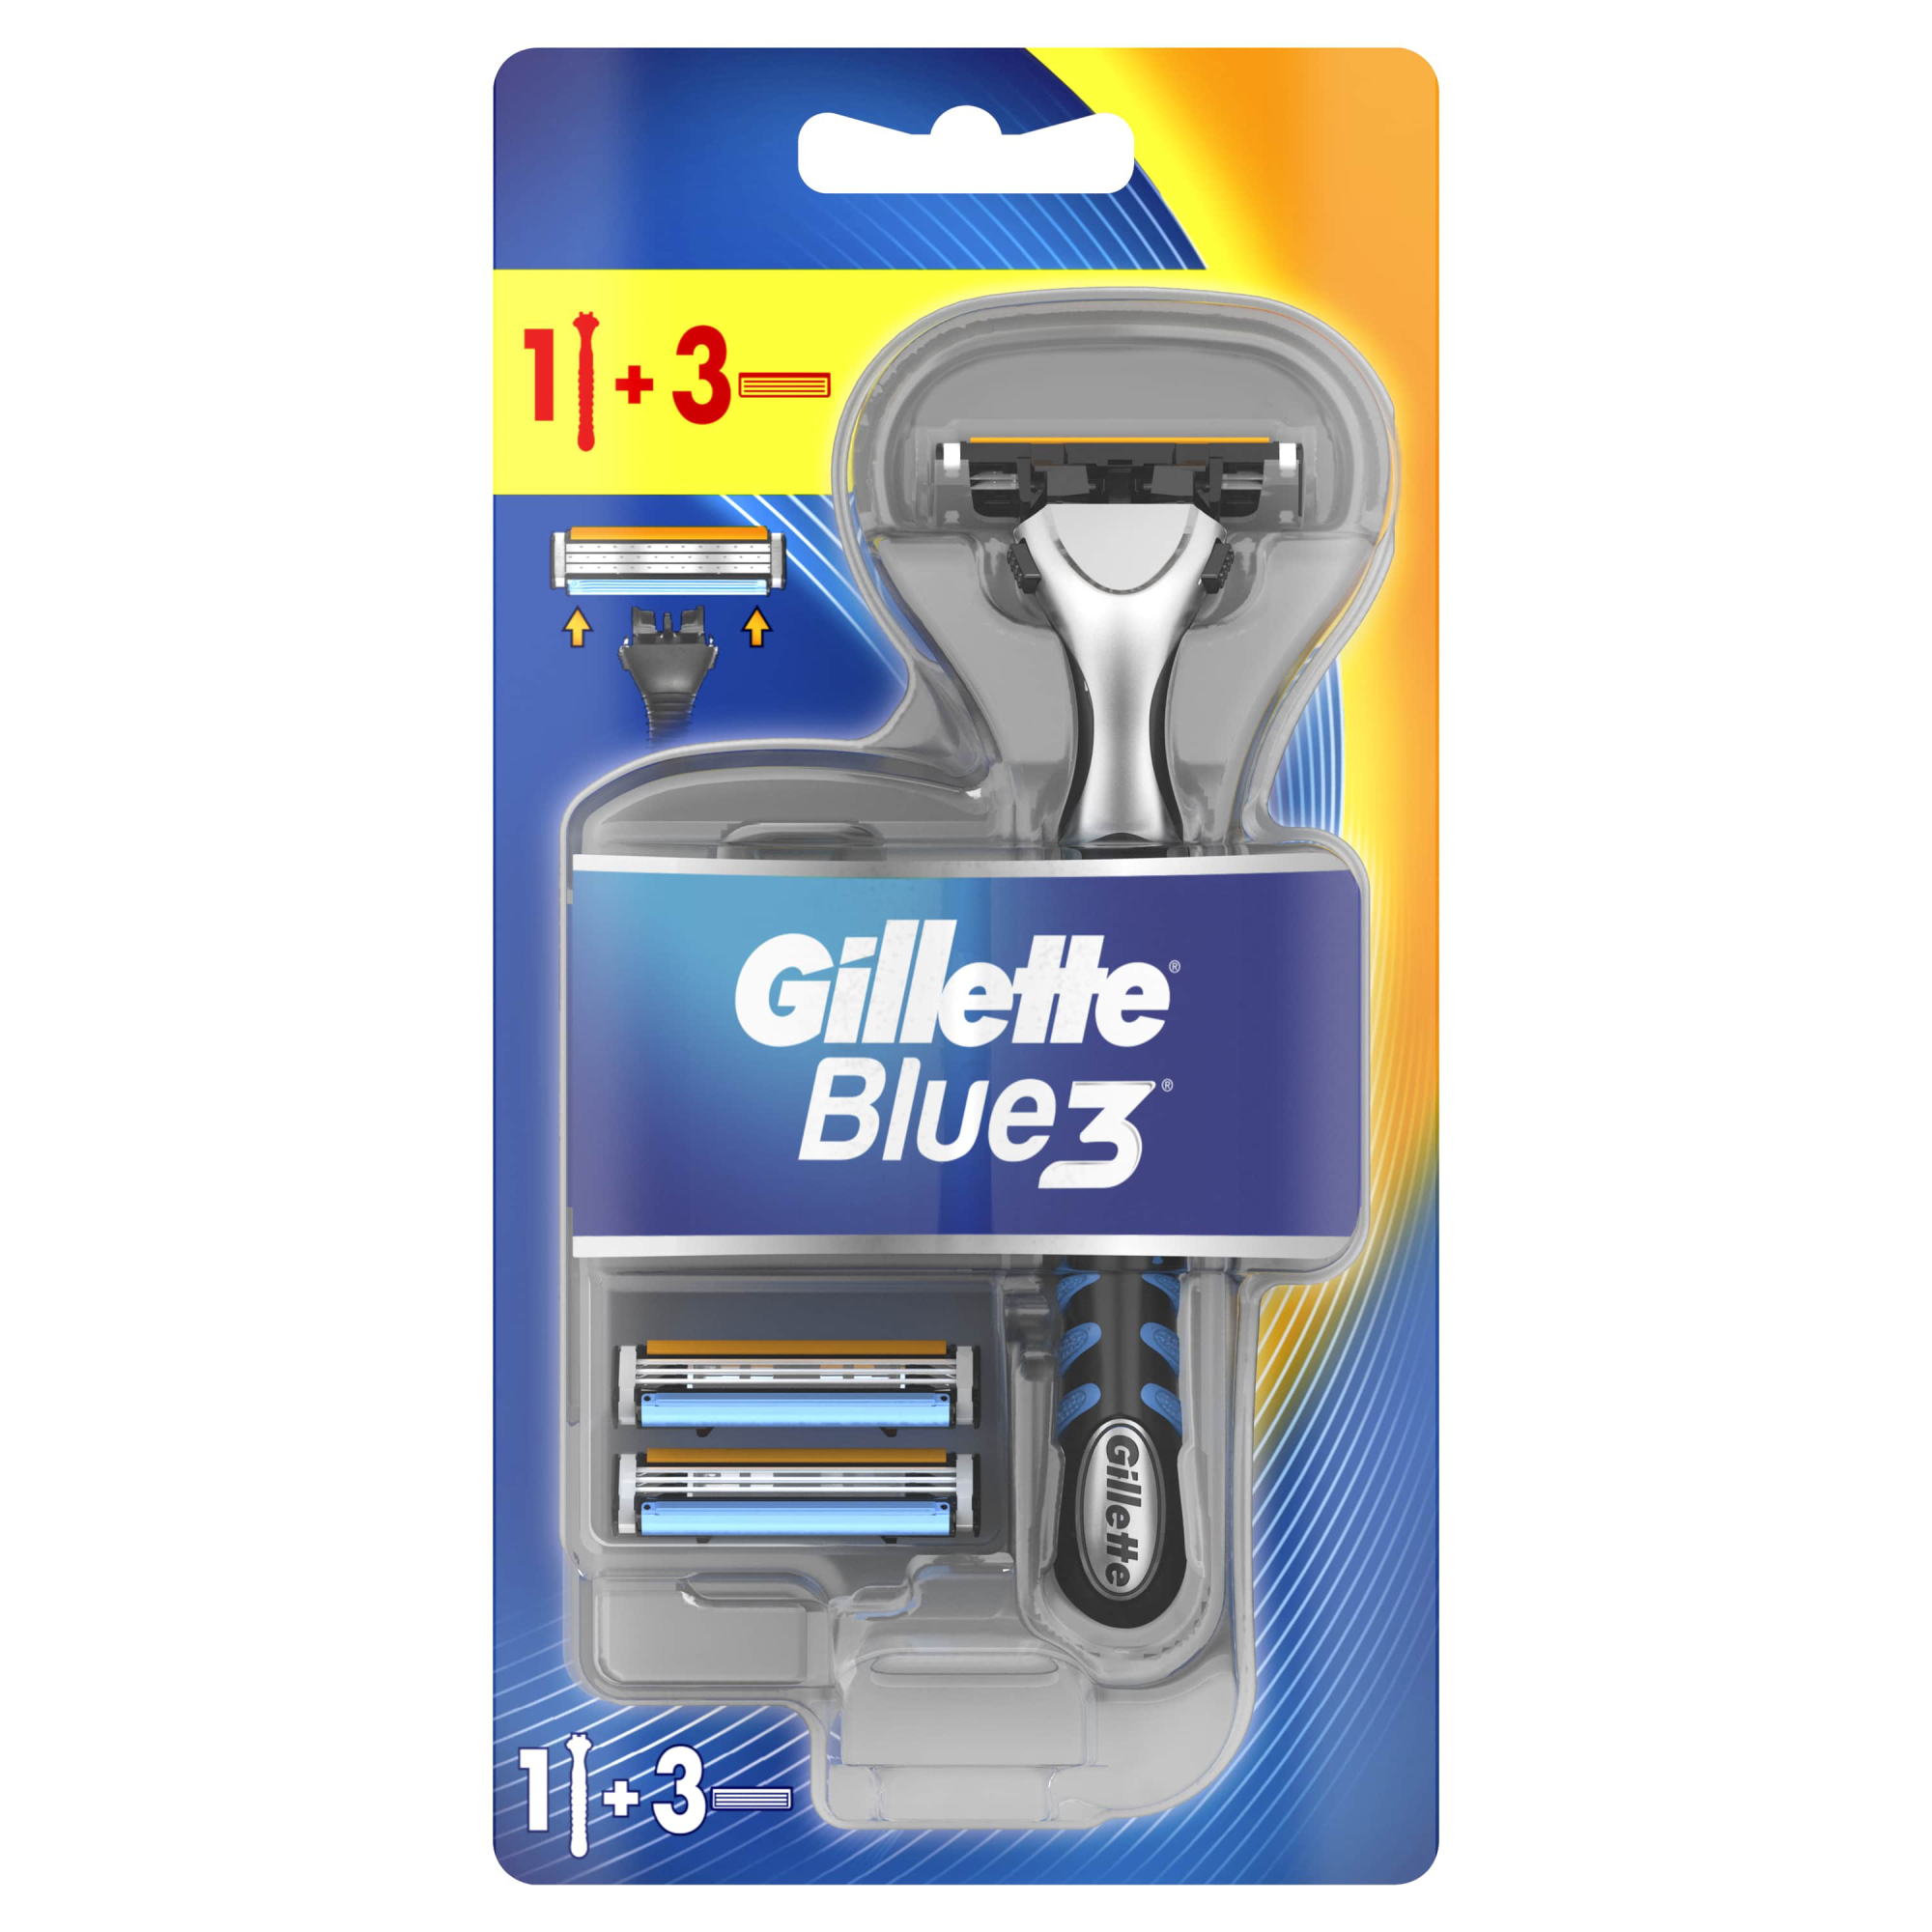 Мужская бритва Gillette Blue3, 3 кассеты, с 3 лезвиями, плавающая головка бритва xiaomi